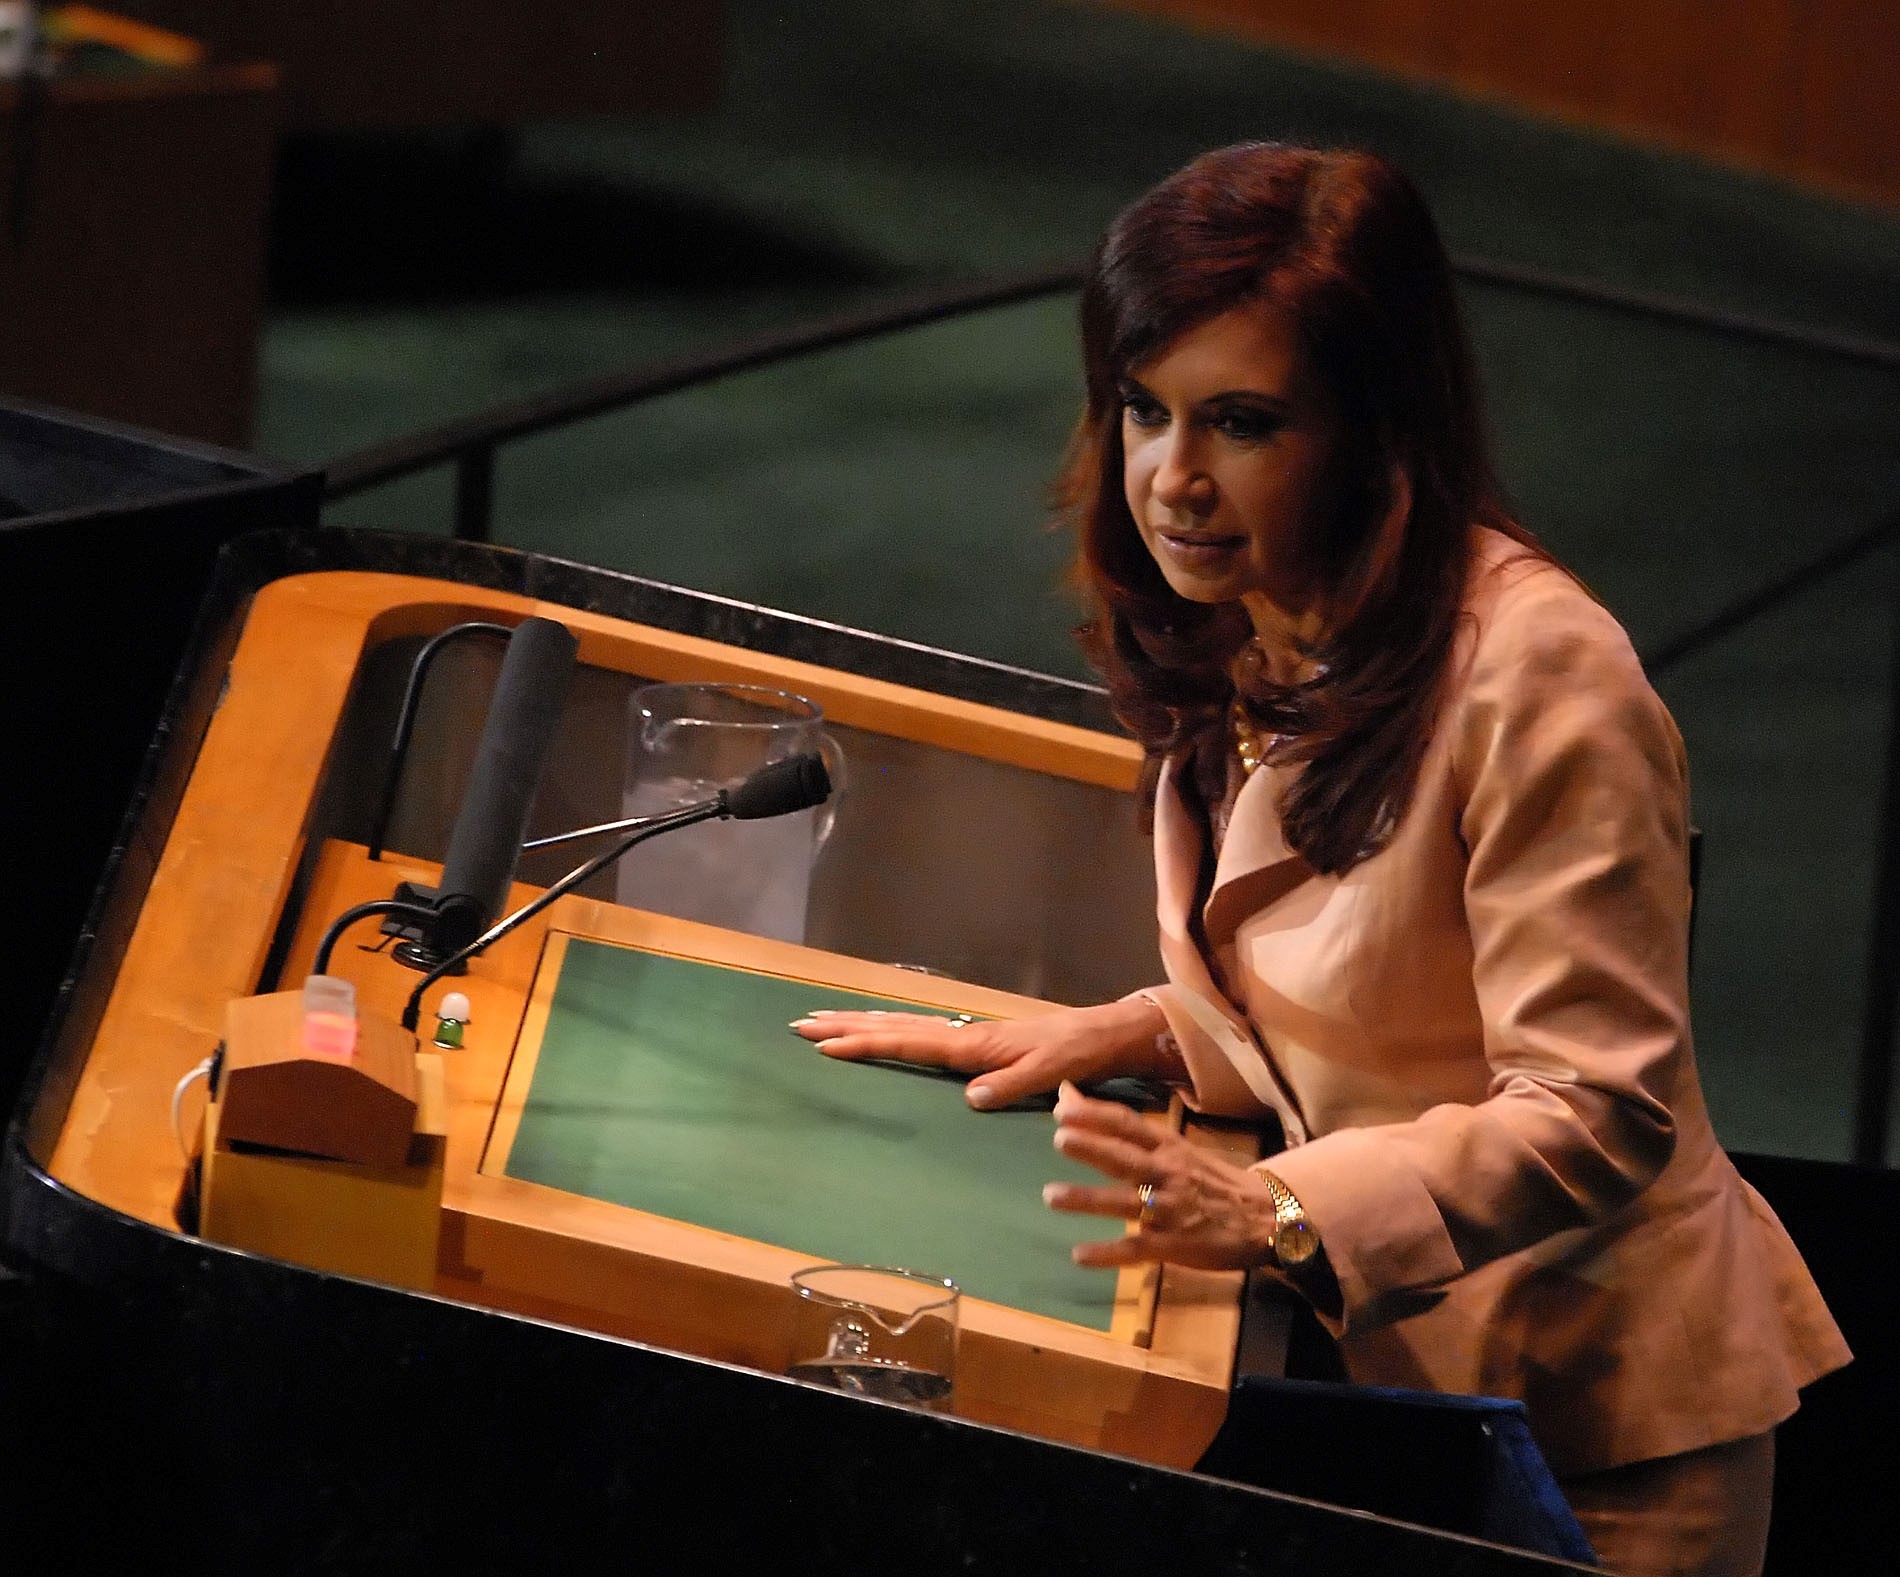 Media censor Argentina president's remarks at UN